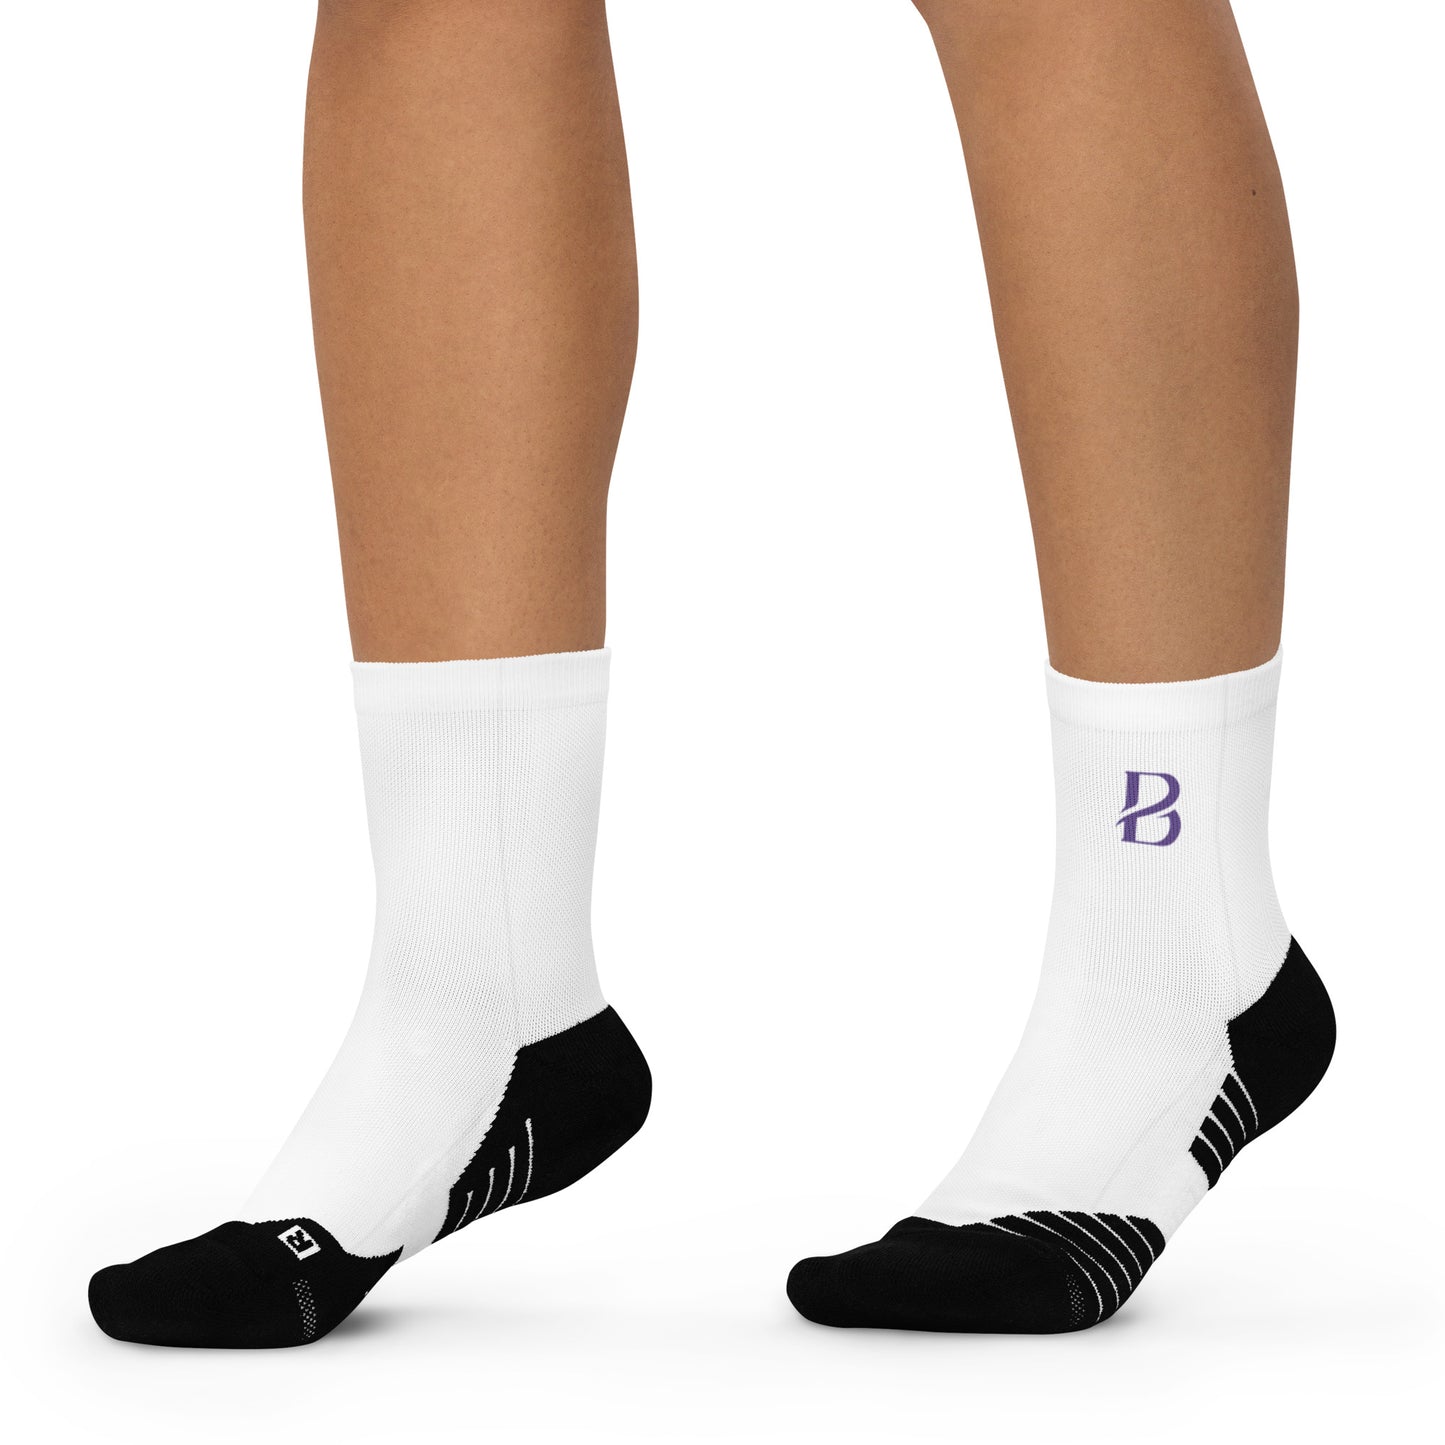 Blue Logo Born To move "B" Ankle Socks